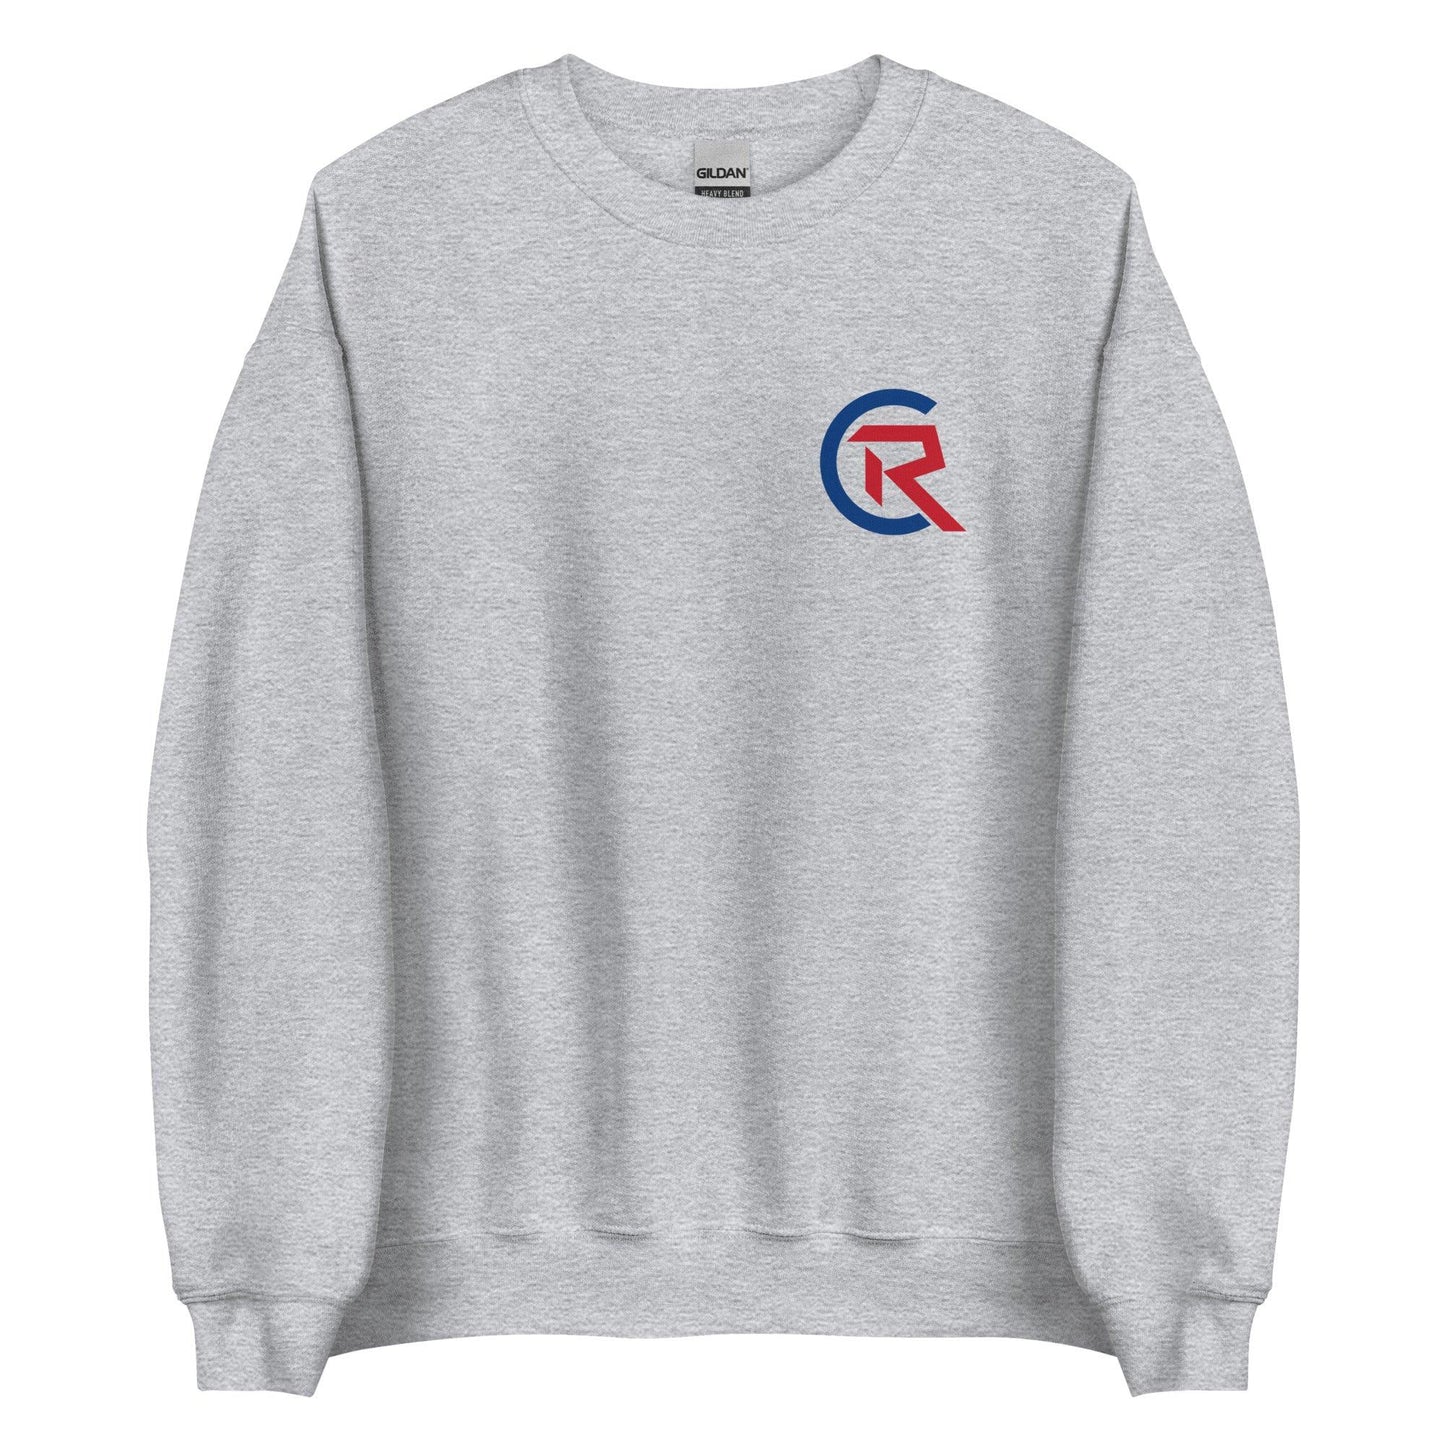 Cole Ragans “Signature” Sweatshirt - Fan Arch